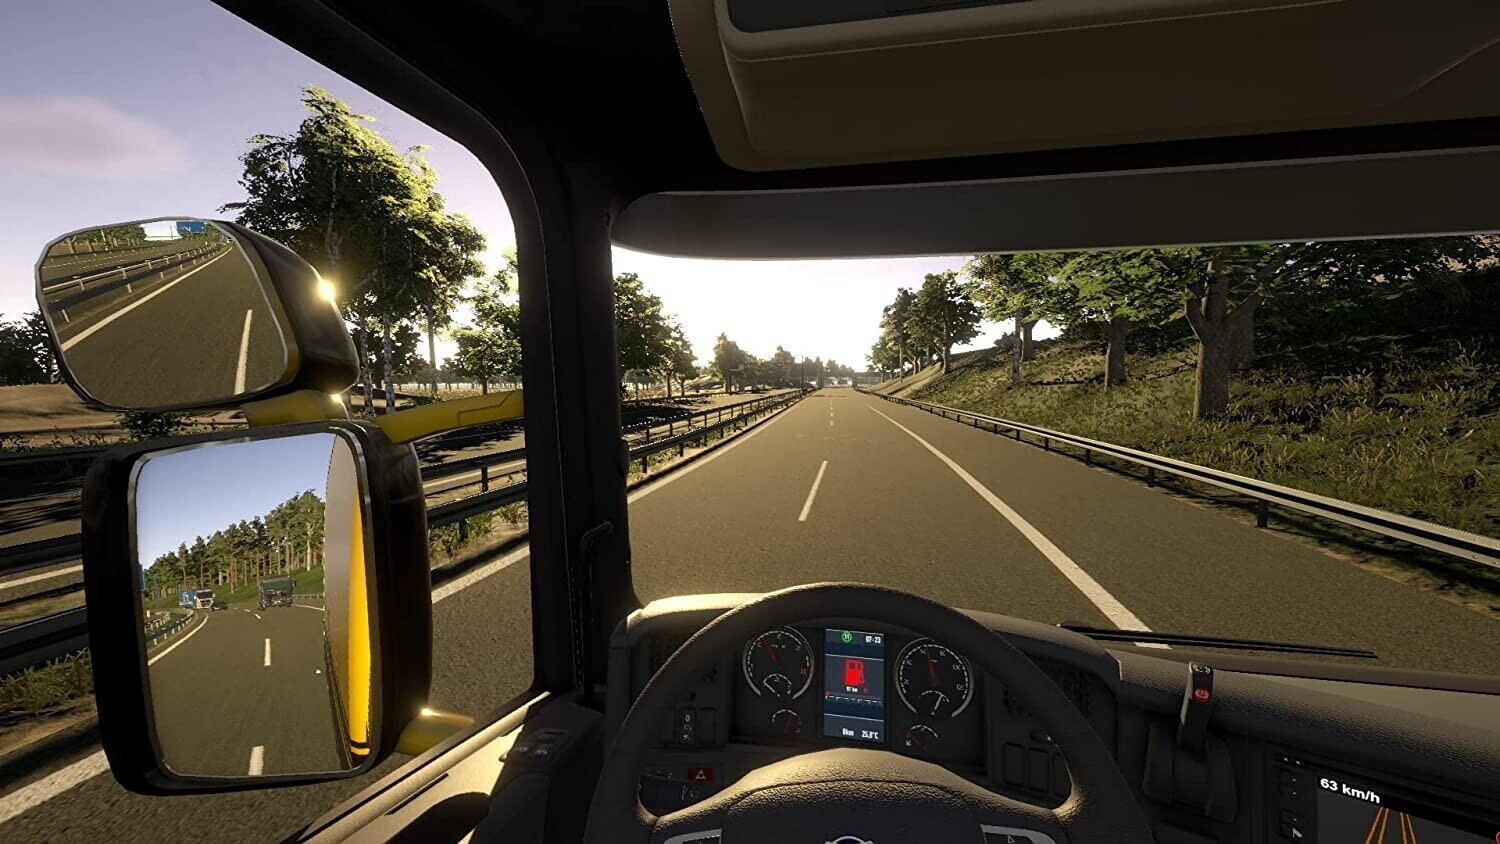 Neu HDC Heavy Duty Challenge PS5 Truck Simulator PlayStation 5 in Bayern -  Steinsfeld, Playstation gebraucht kaufen